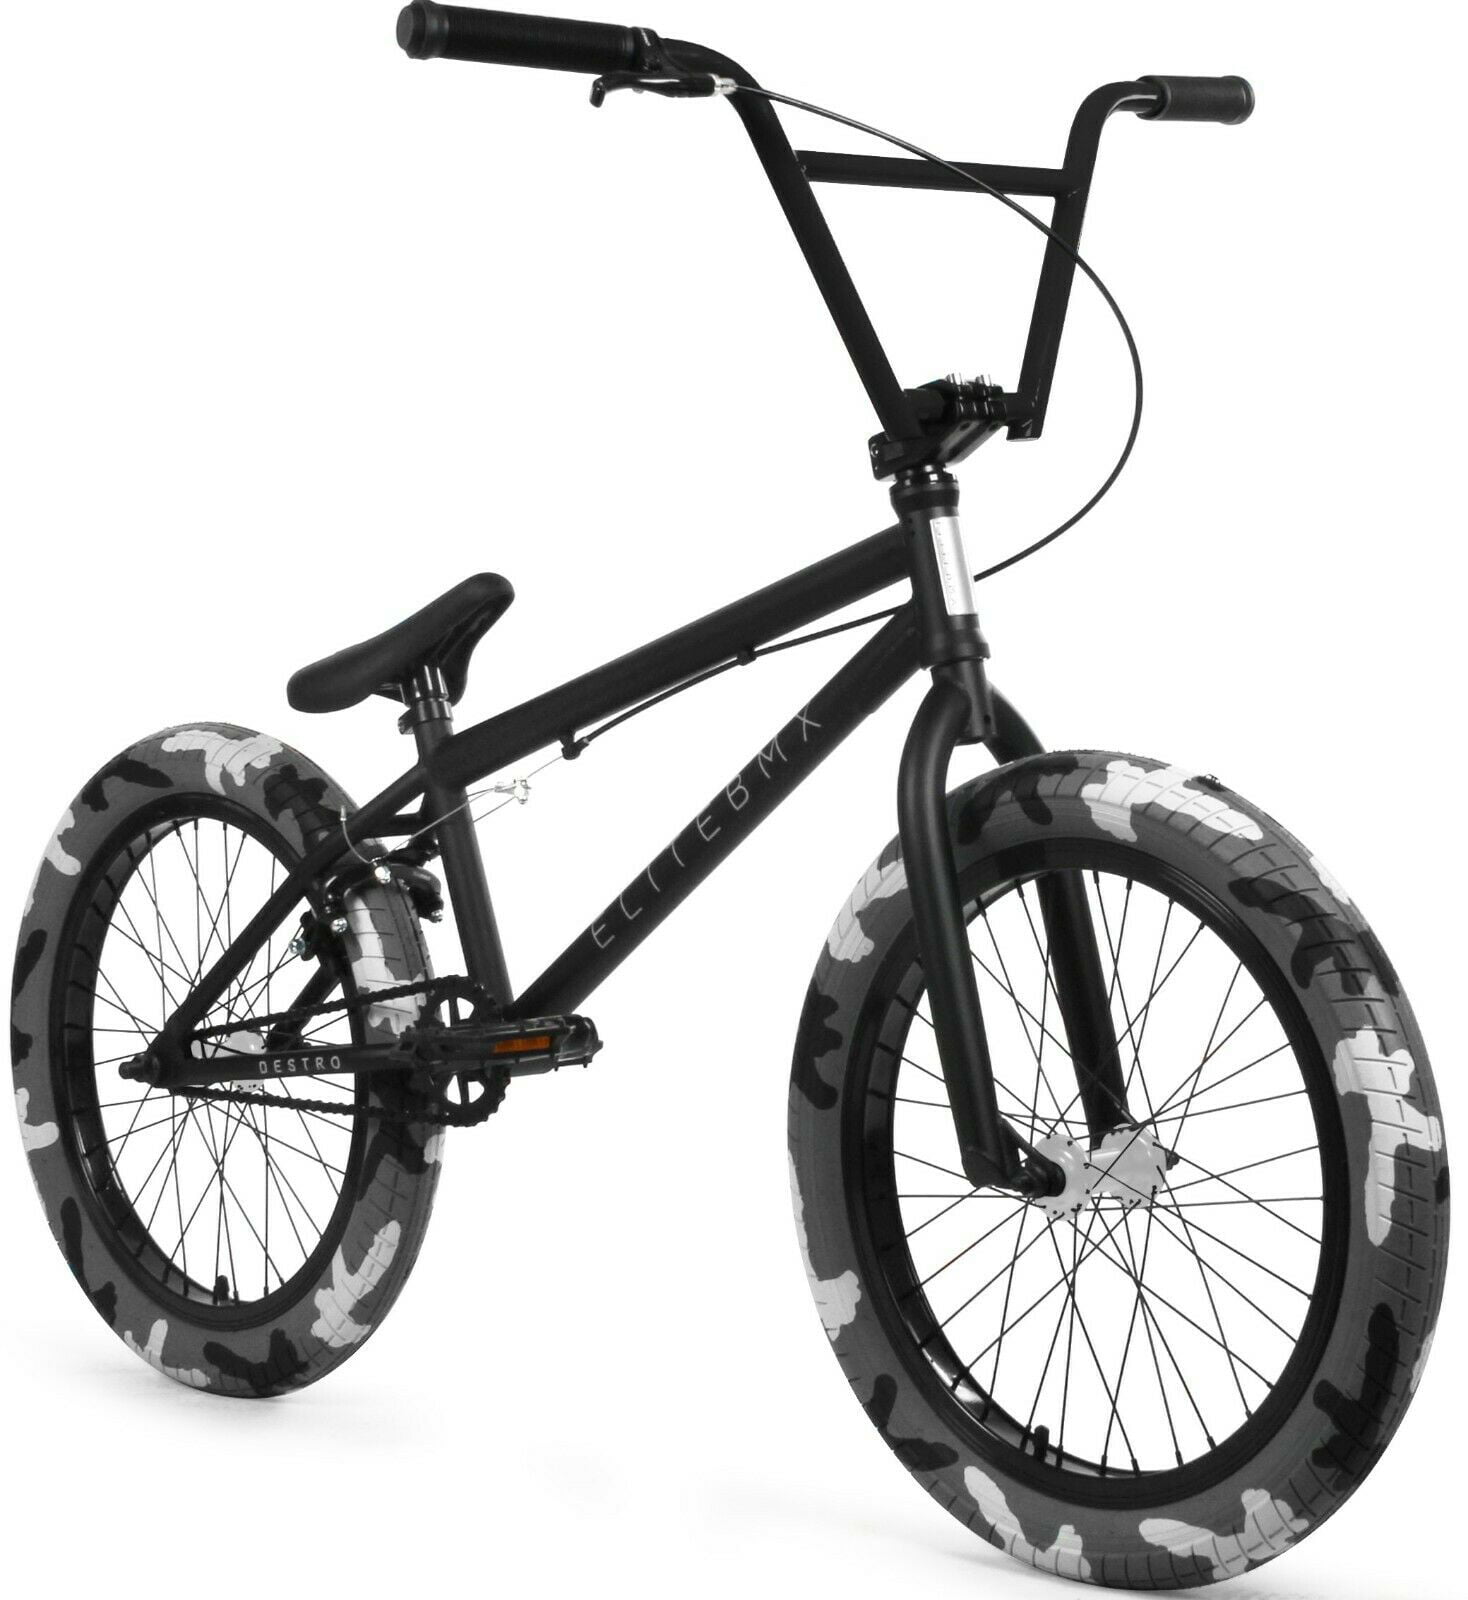 Eastern 20" BMX Element Bicycle Freestyle Bike 3 Piece Crank Black 2020 NEW 